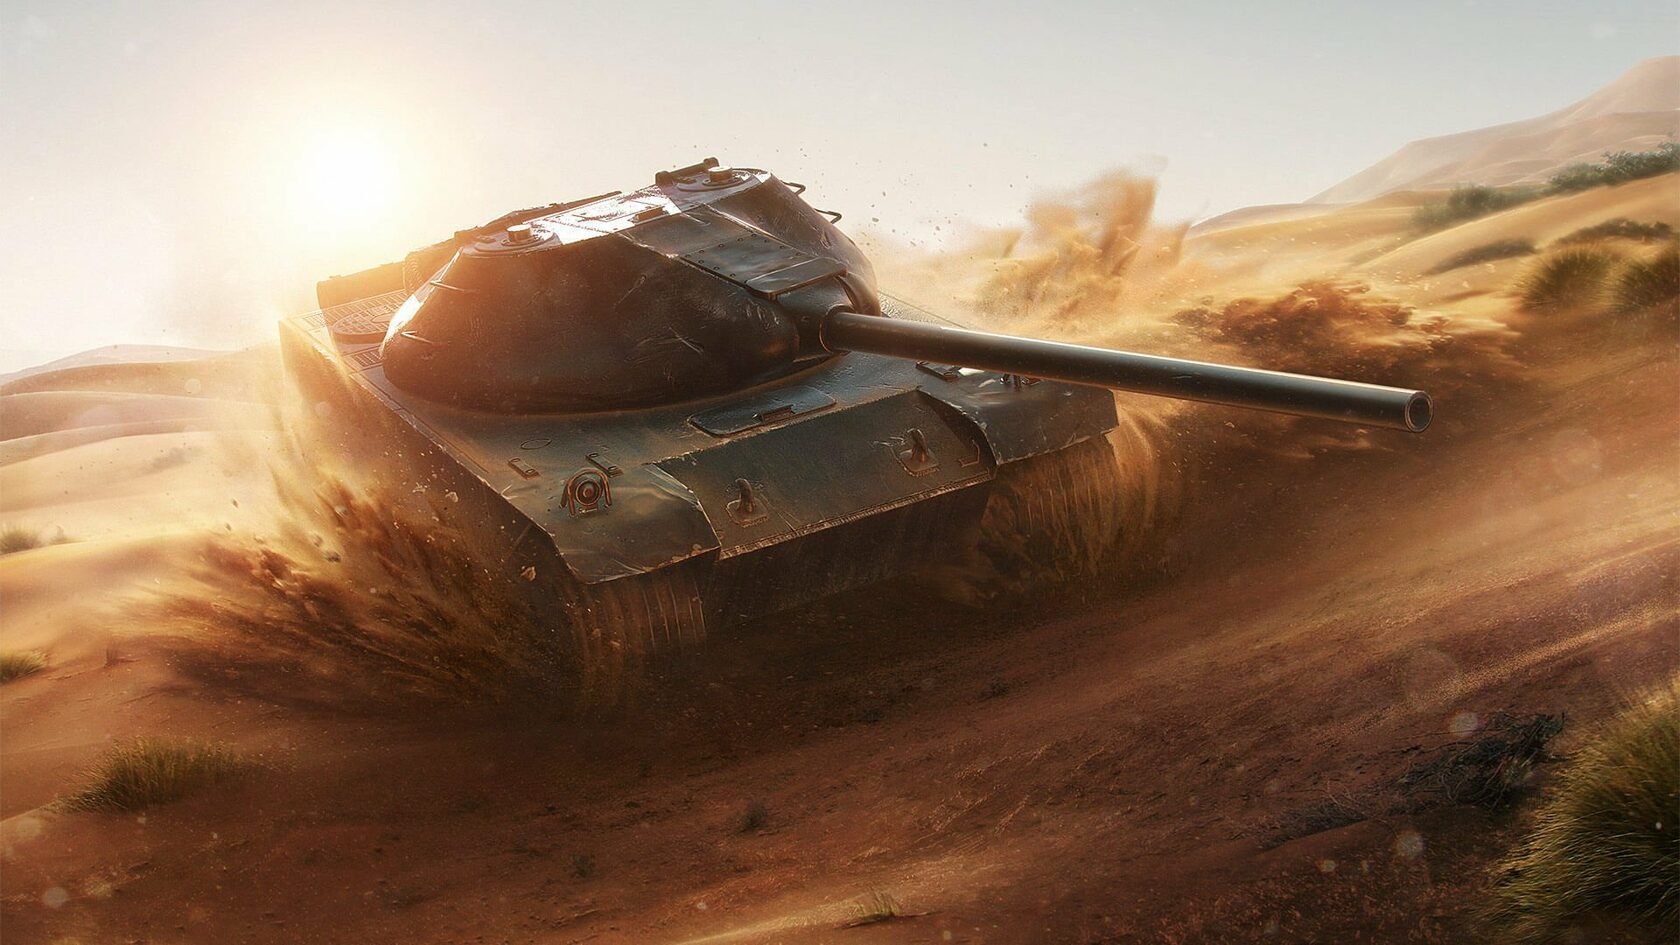 Танк блиц на планшет. К91 блиц. К91 World of Tanks Blitz. К-91 танк World of Tanks. К-91 WOT Blitz.